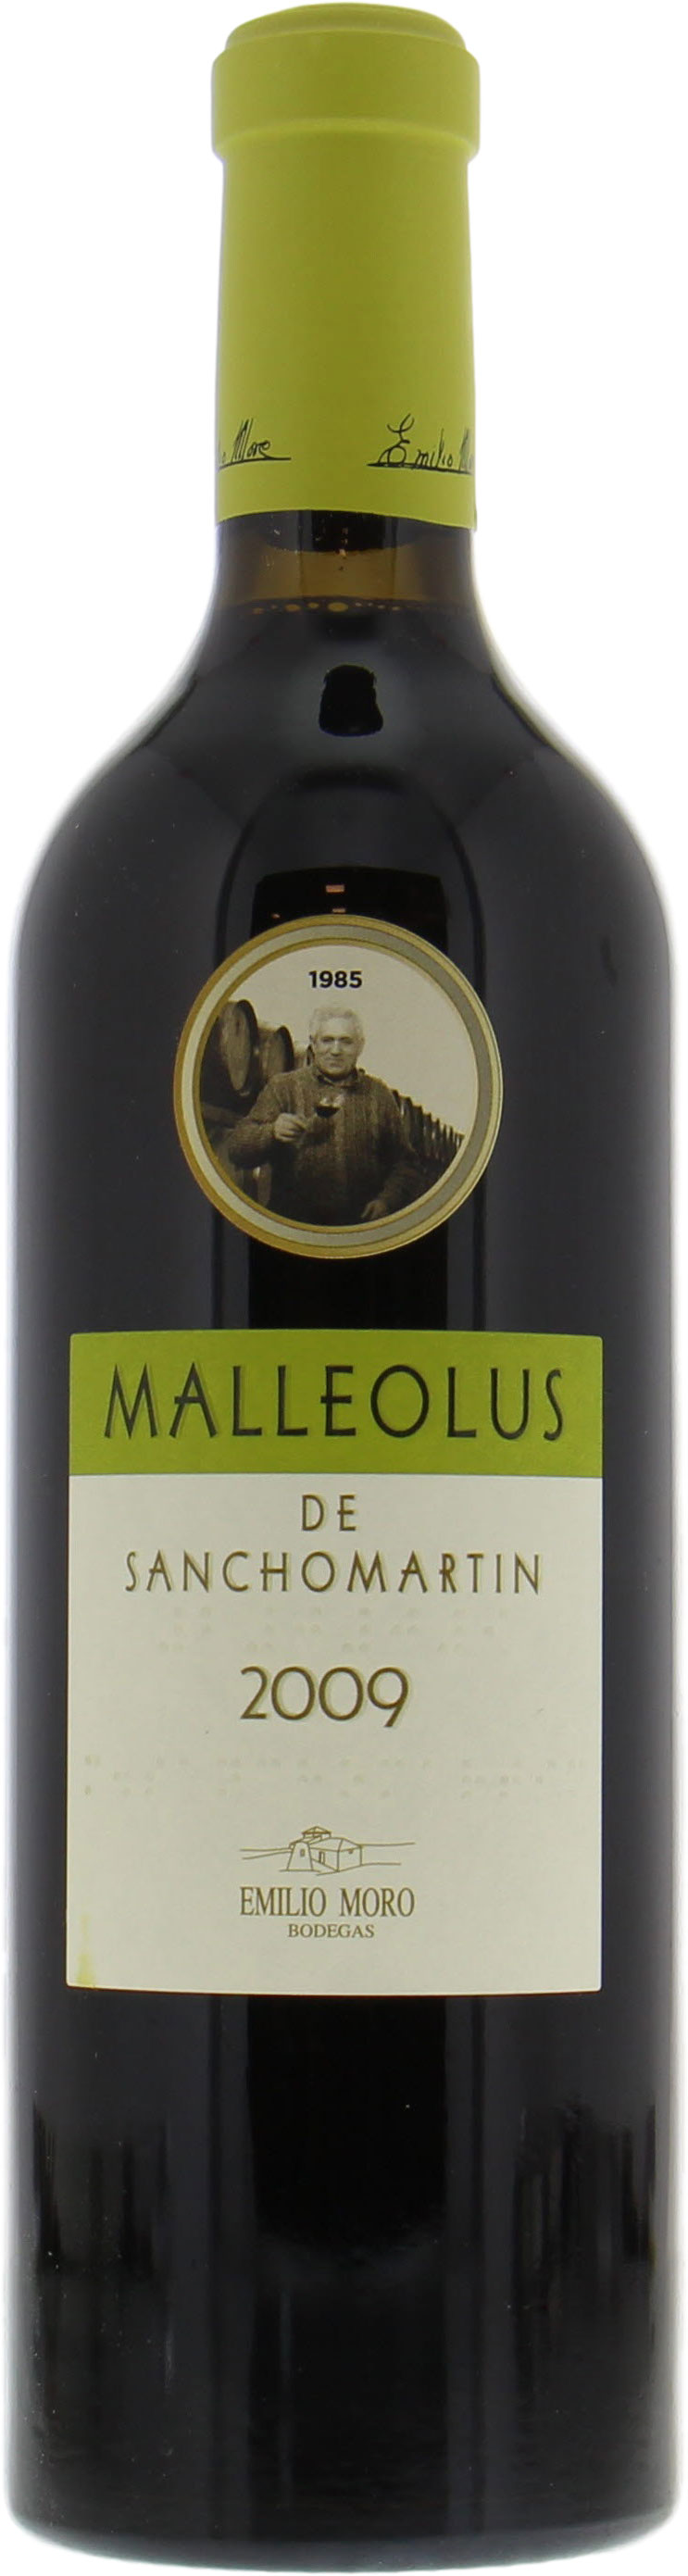 Bodegas Emilio Moro - Malleolus de Sancho Martin 2009